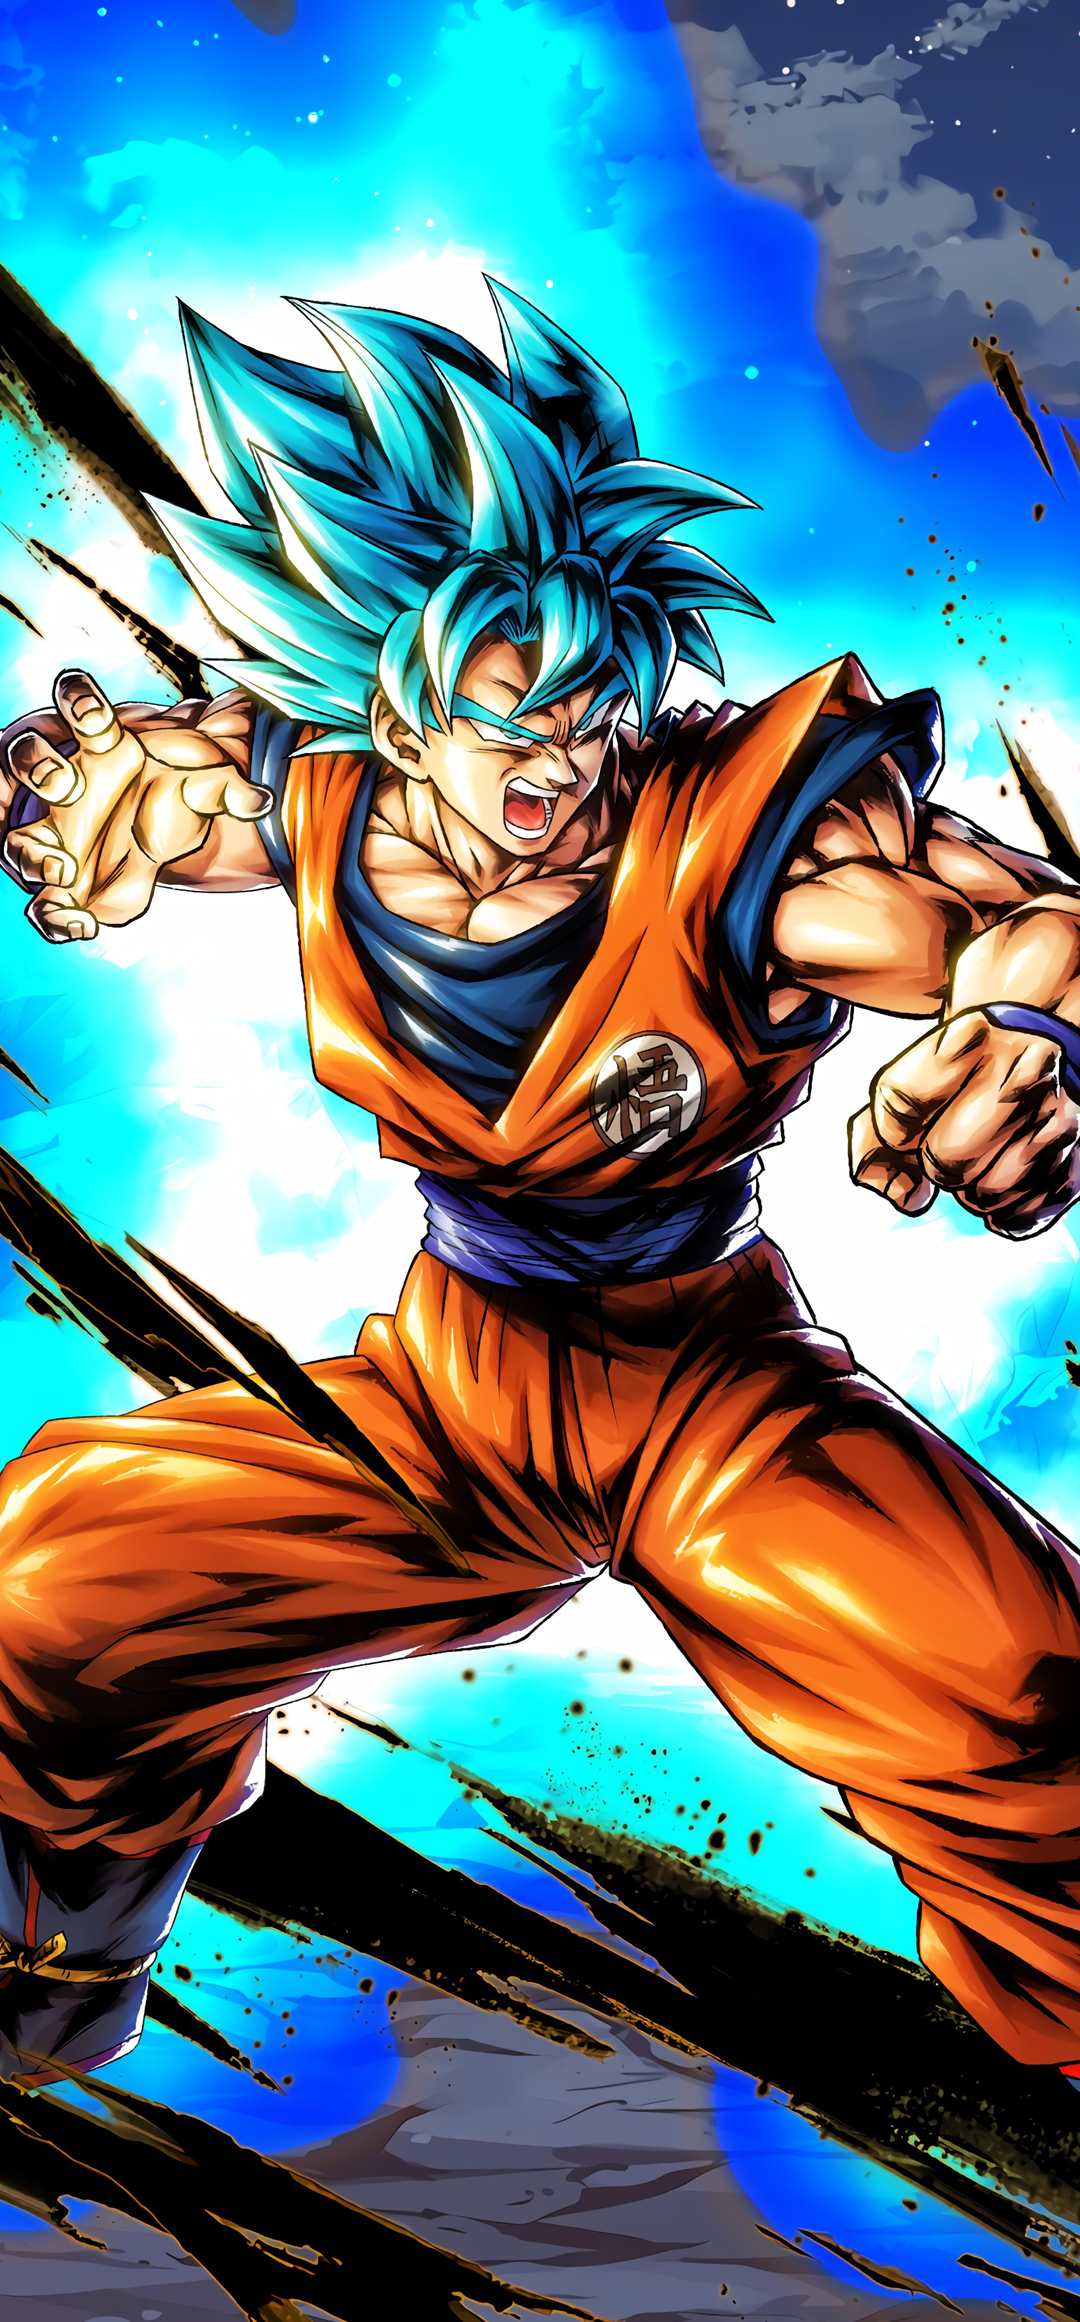 Super Saiyan God SS Goku (SP) (BLU) (Revival)